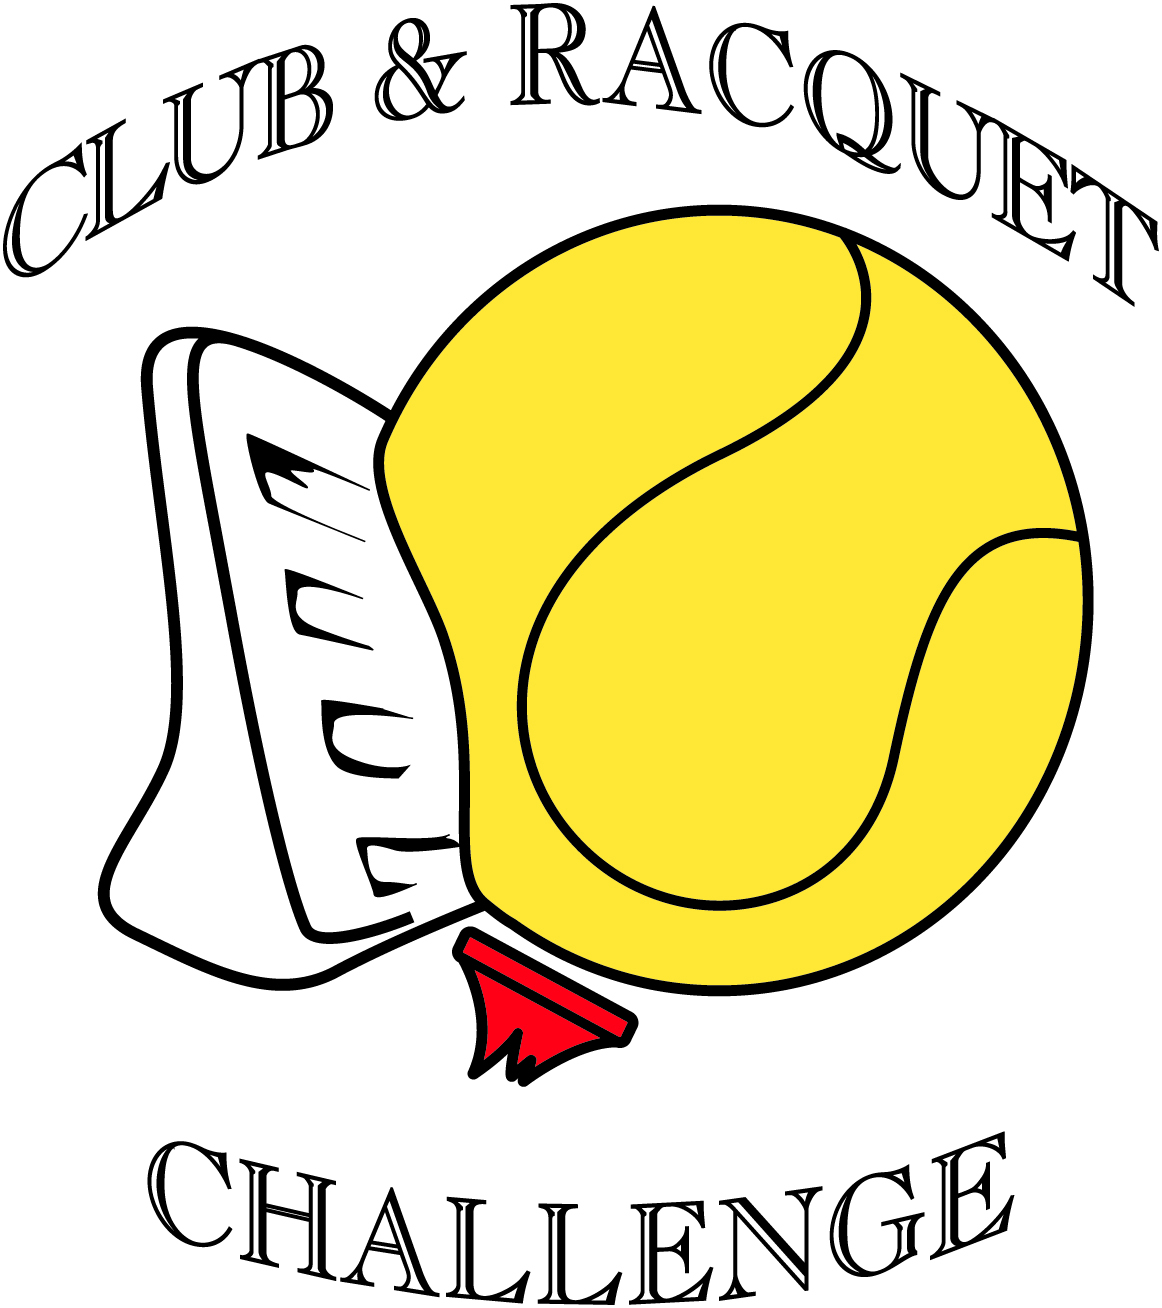 CLUB & RACQUET CHALLENGE